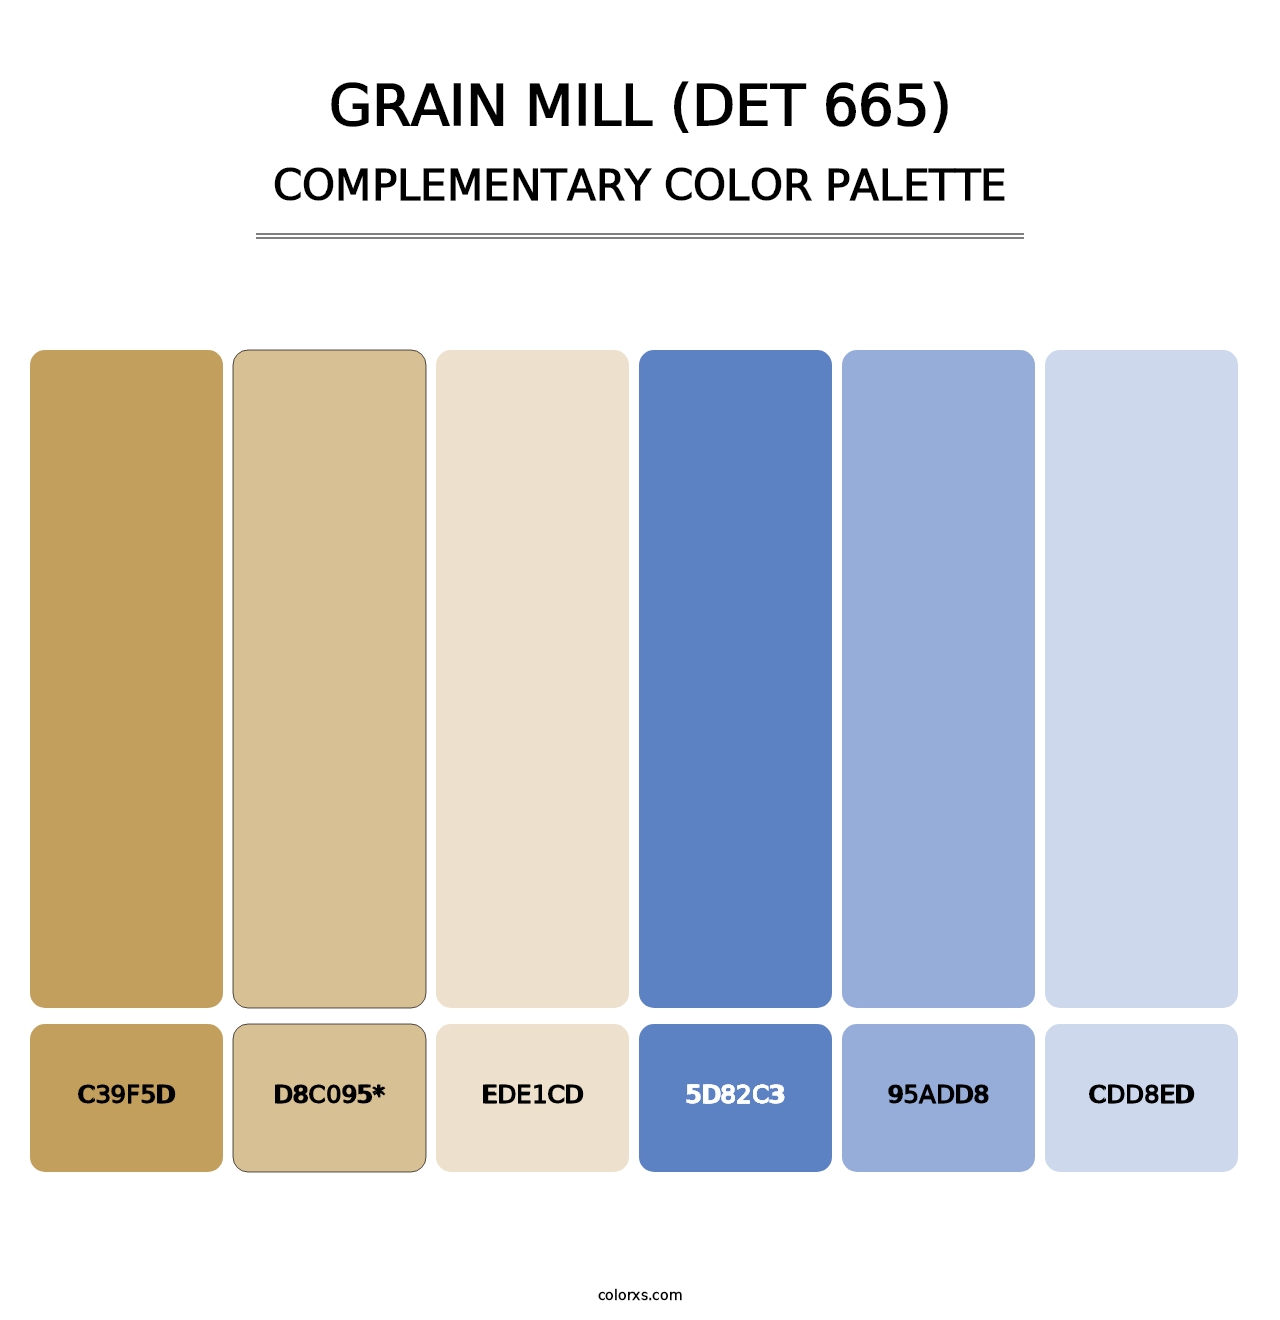 Grain Mill (DET 665) - Complementary Color Palette